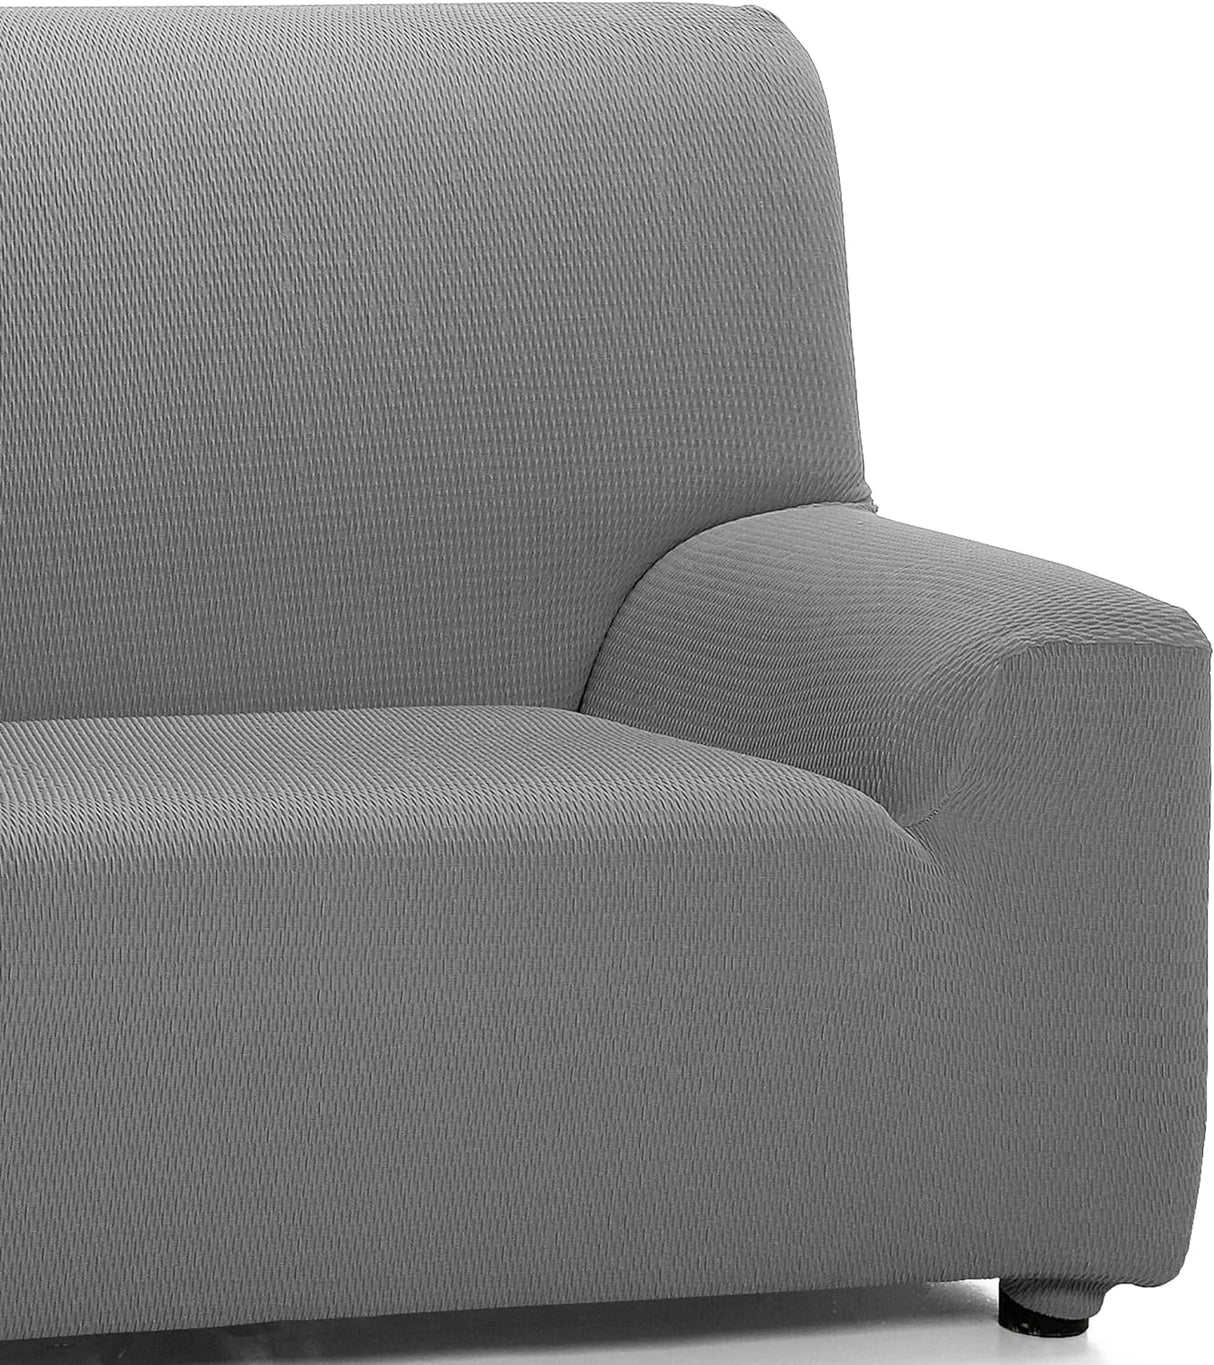 Martina Home 3 Seat Sofa Cover Gray